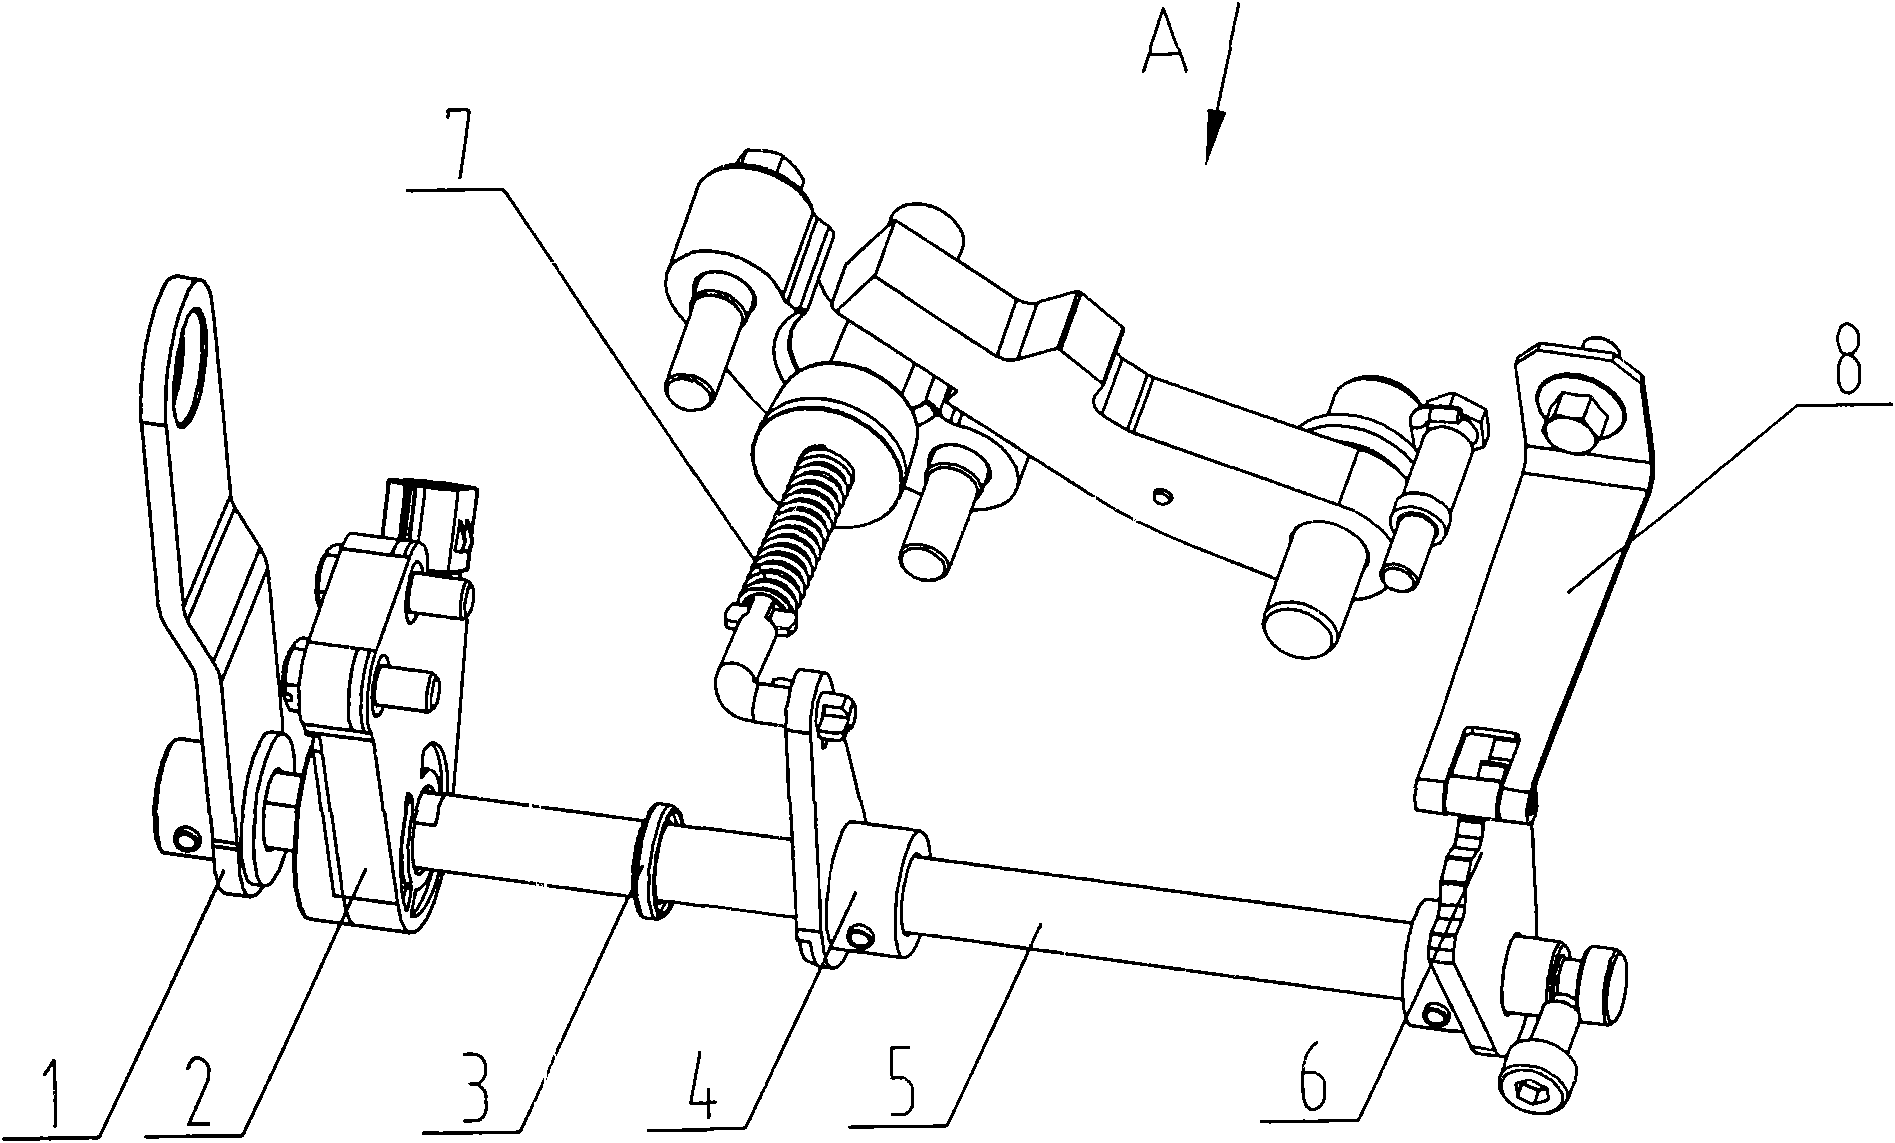 Novel parking braking mechanism of dual clutch automatic transmission (DCT)